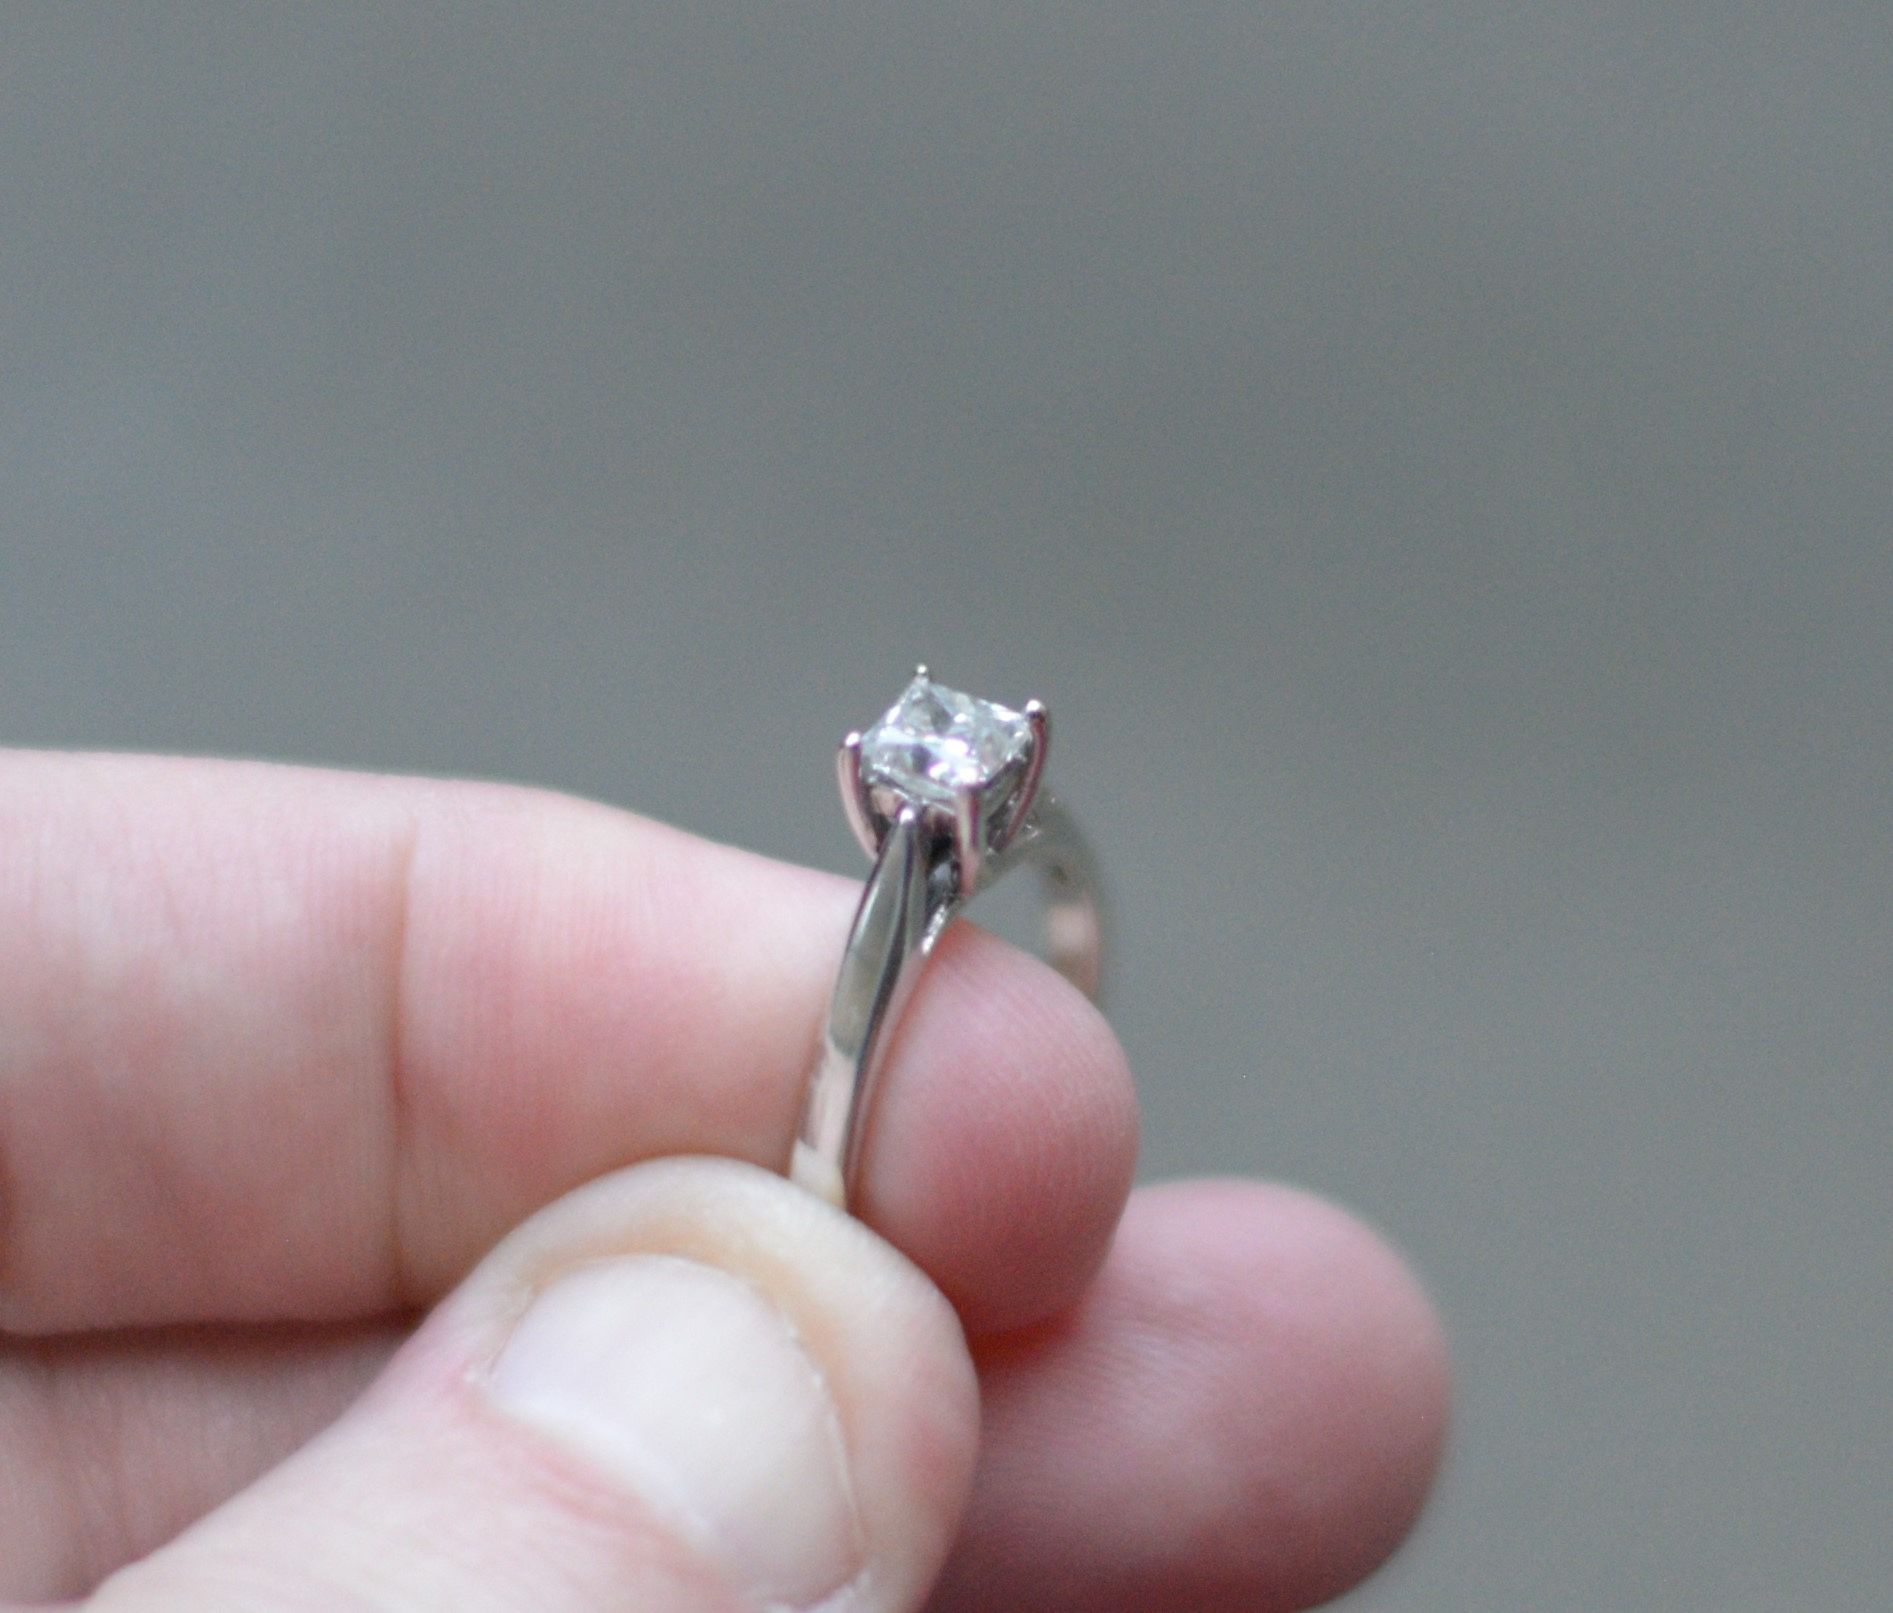 1 Carat Natural Princess Cut Diamond Ring In 14k White Gold Setting